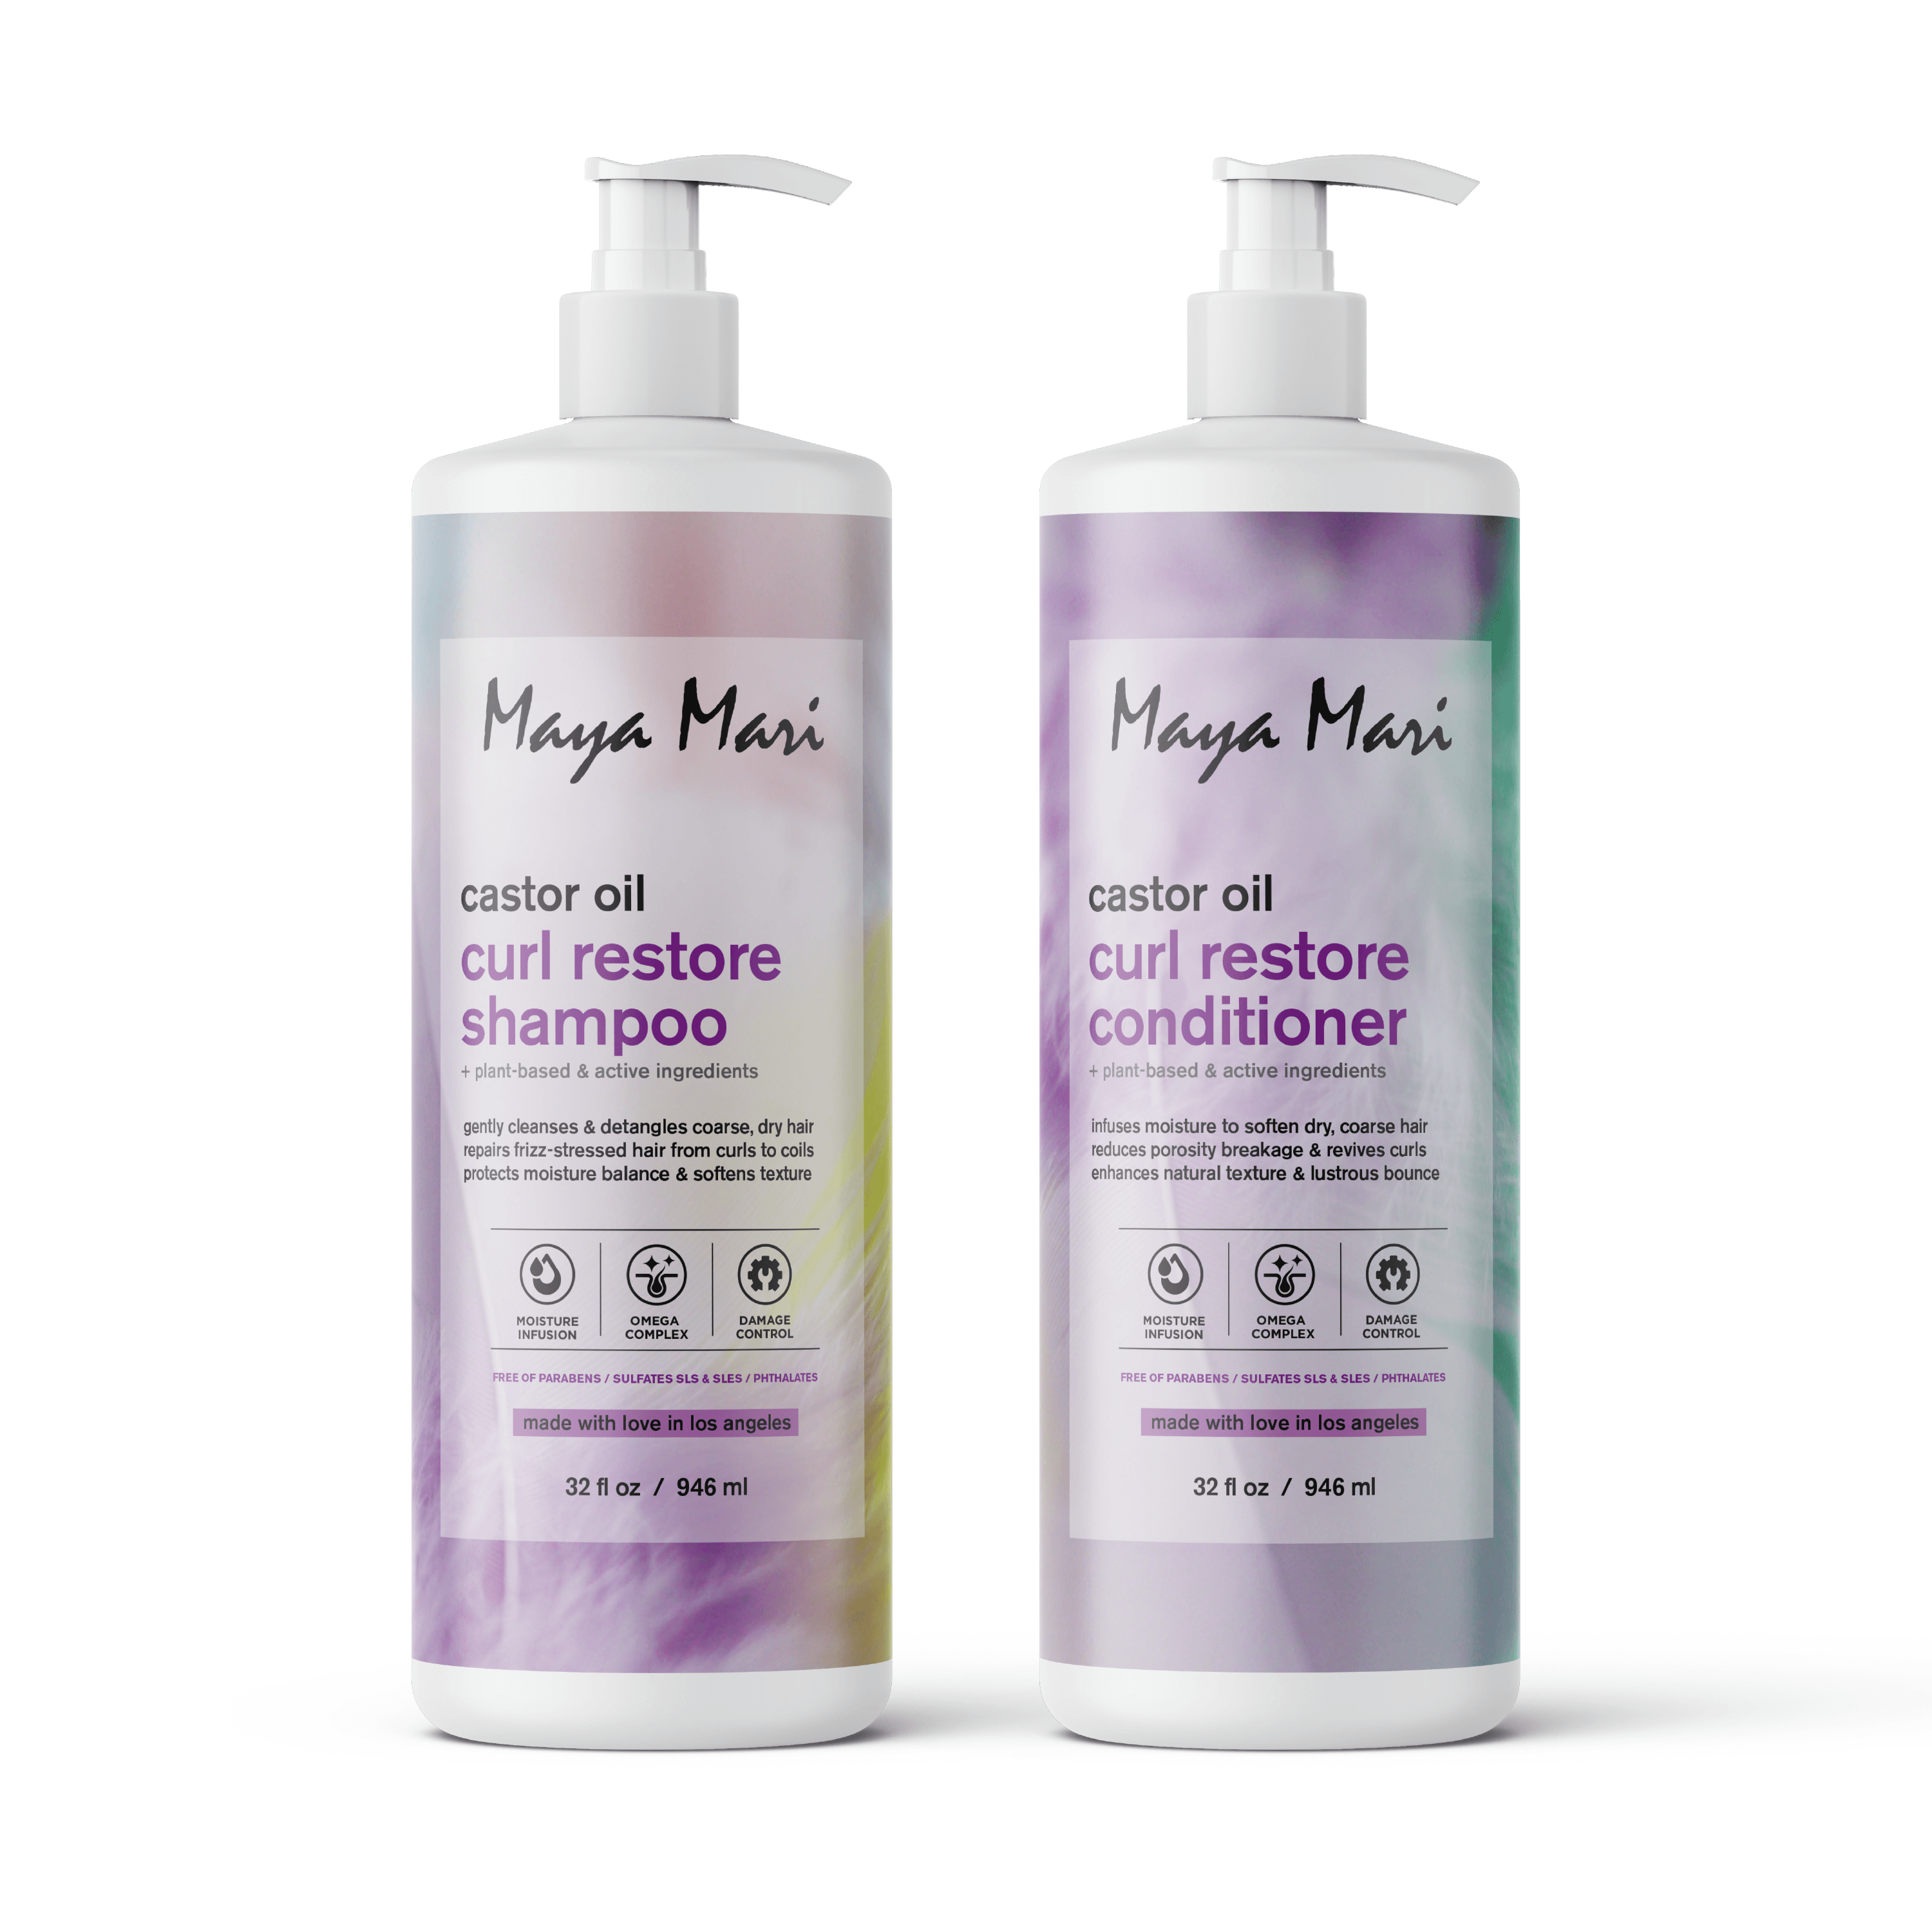 Maya Mari Castor Oil Curl Restore Shampoo & Conditioner SET - Sulfate Free Damage Repair & Moisture Seal for Dry Coarse Hair, 32 fl oz